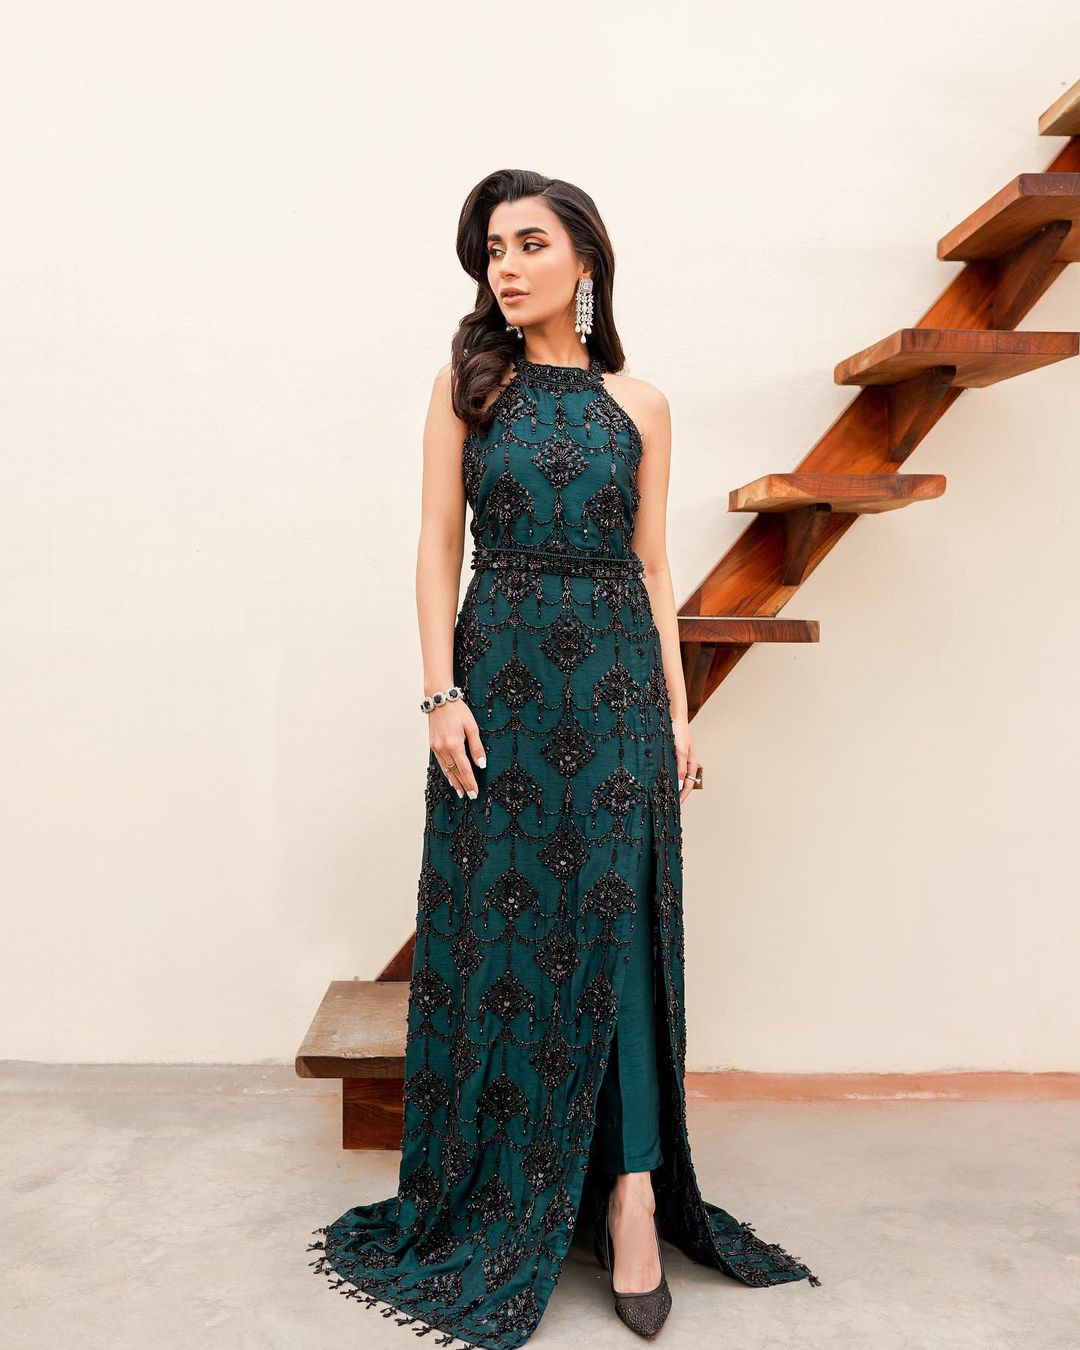 Sona Rafiq Spells Glam in Chic Emerald Dress [Pictures] - Lens